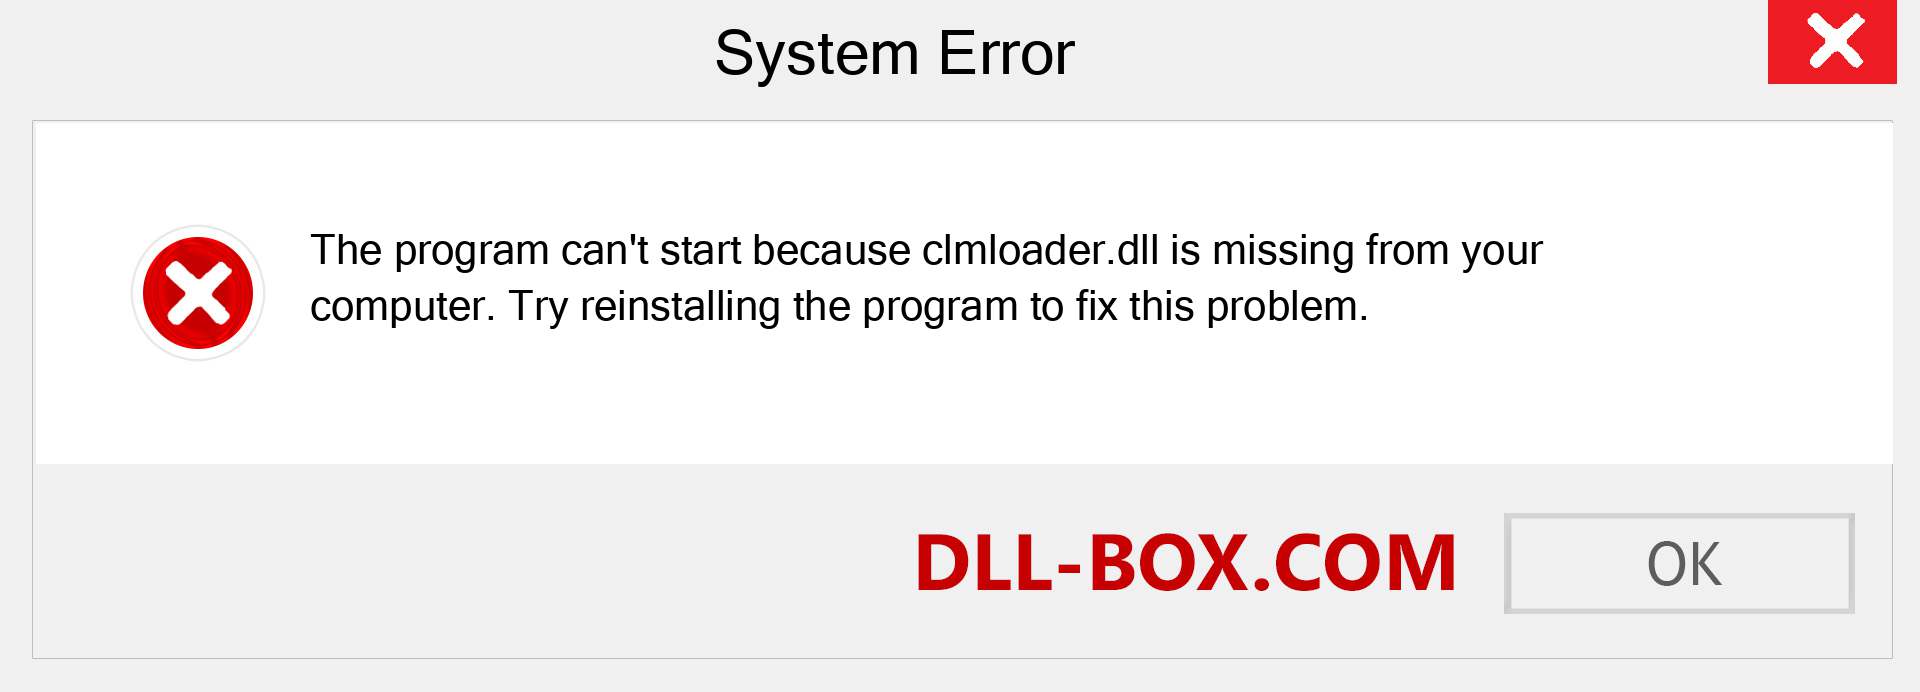  clmloader.dll file is missing?. Download for Windows 7, 8, 10 - Fix  clmloader dll Missing Error on Windows, photos, images